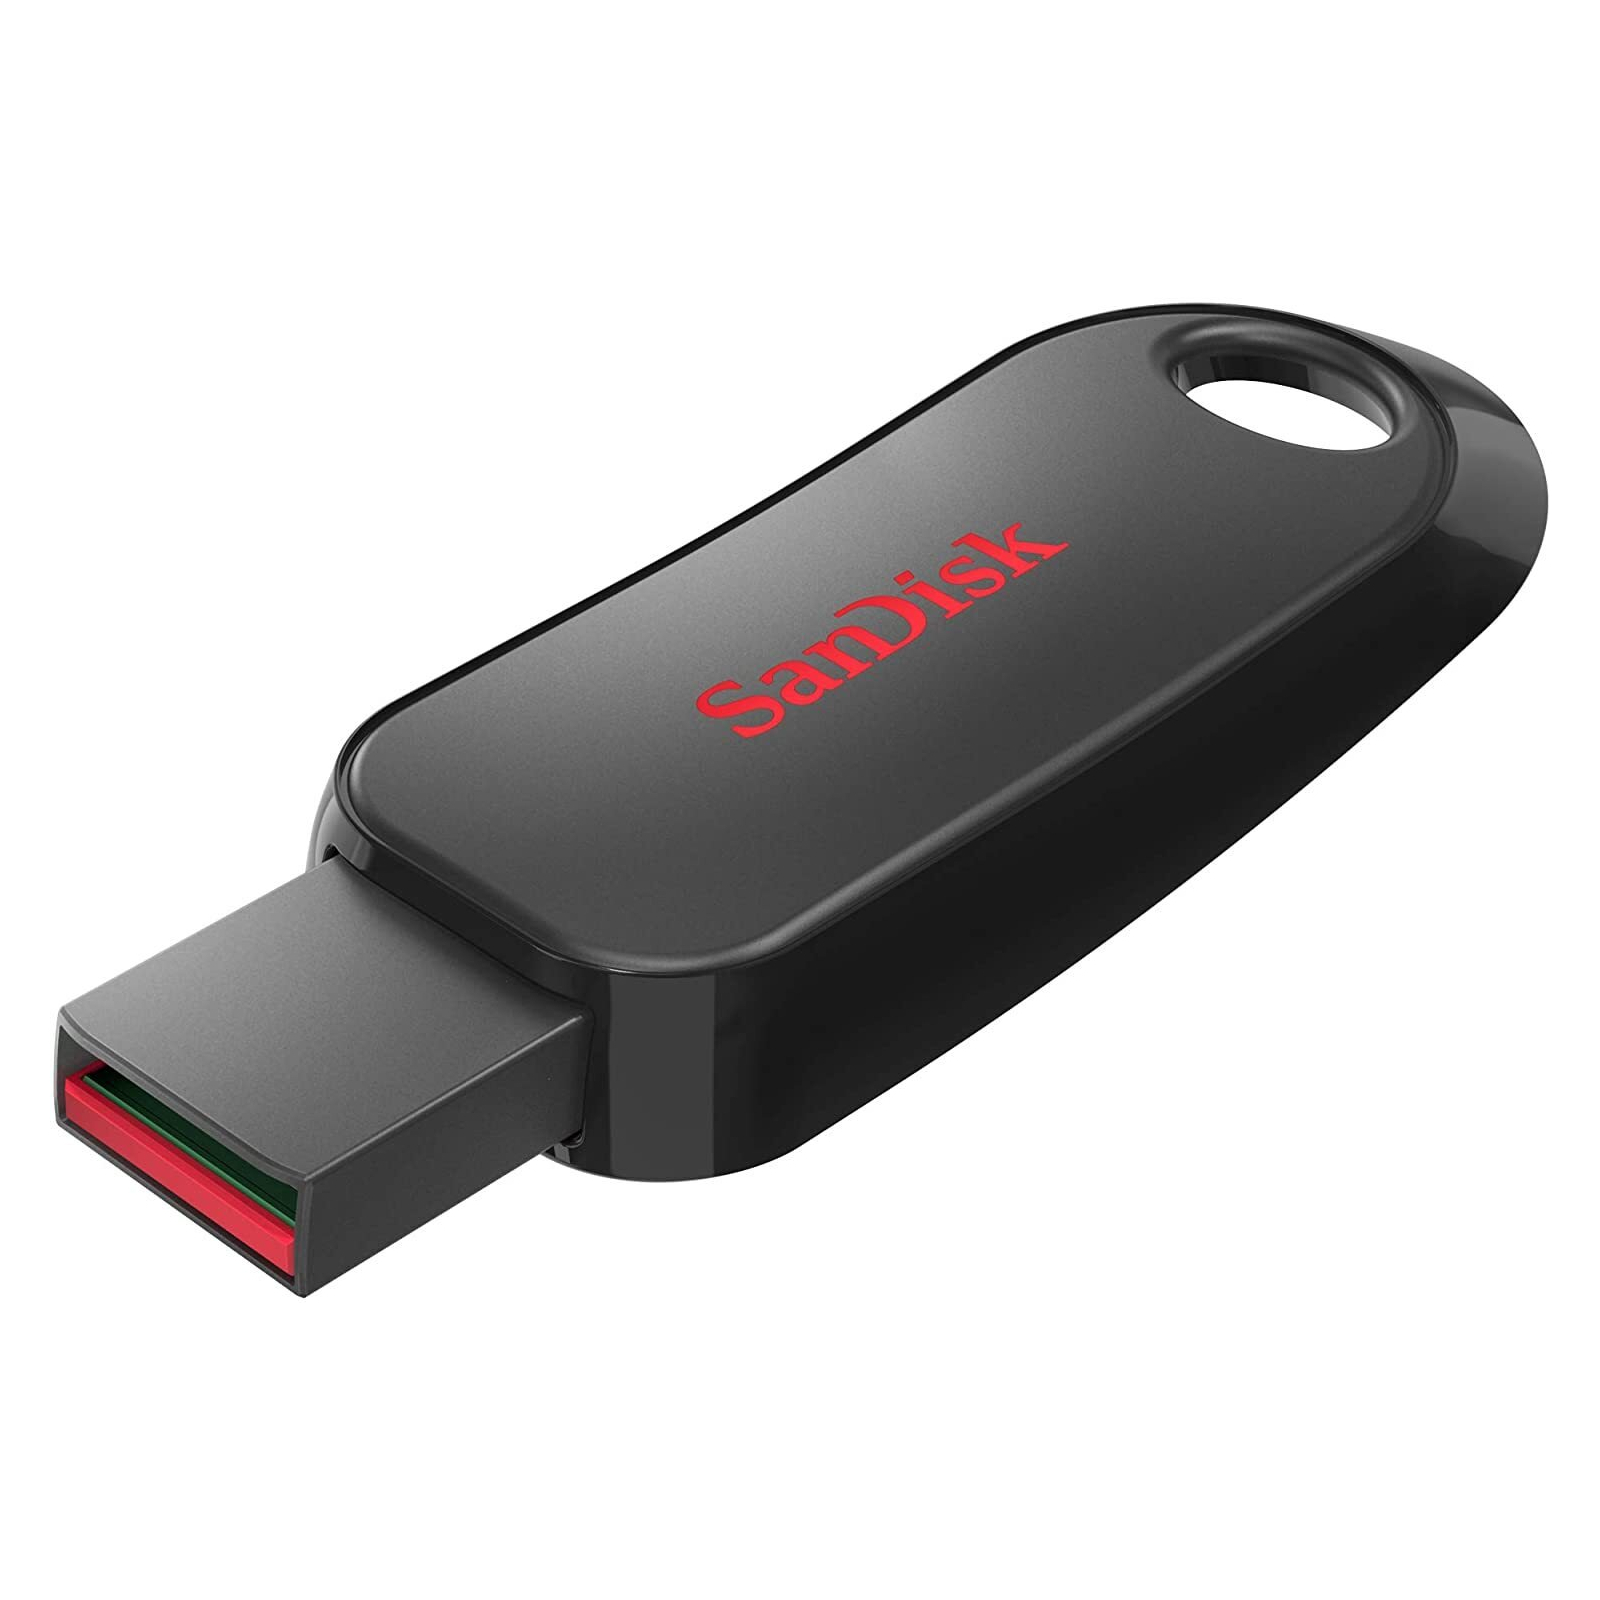 USB флеш накопитель SanDisk 16GB Cruzer Snap USB 2.0 (SDCZ62-016G-G35) изображение 4